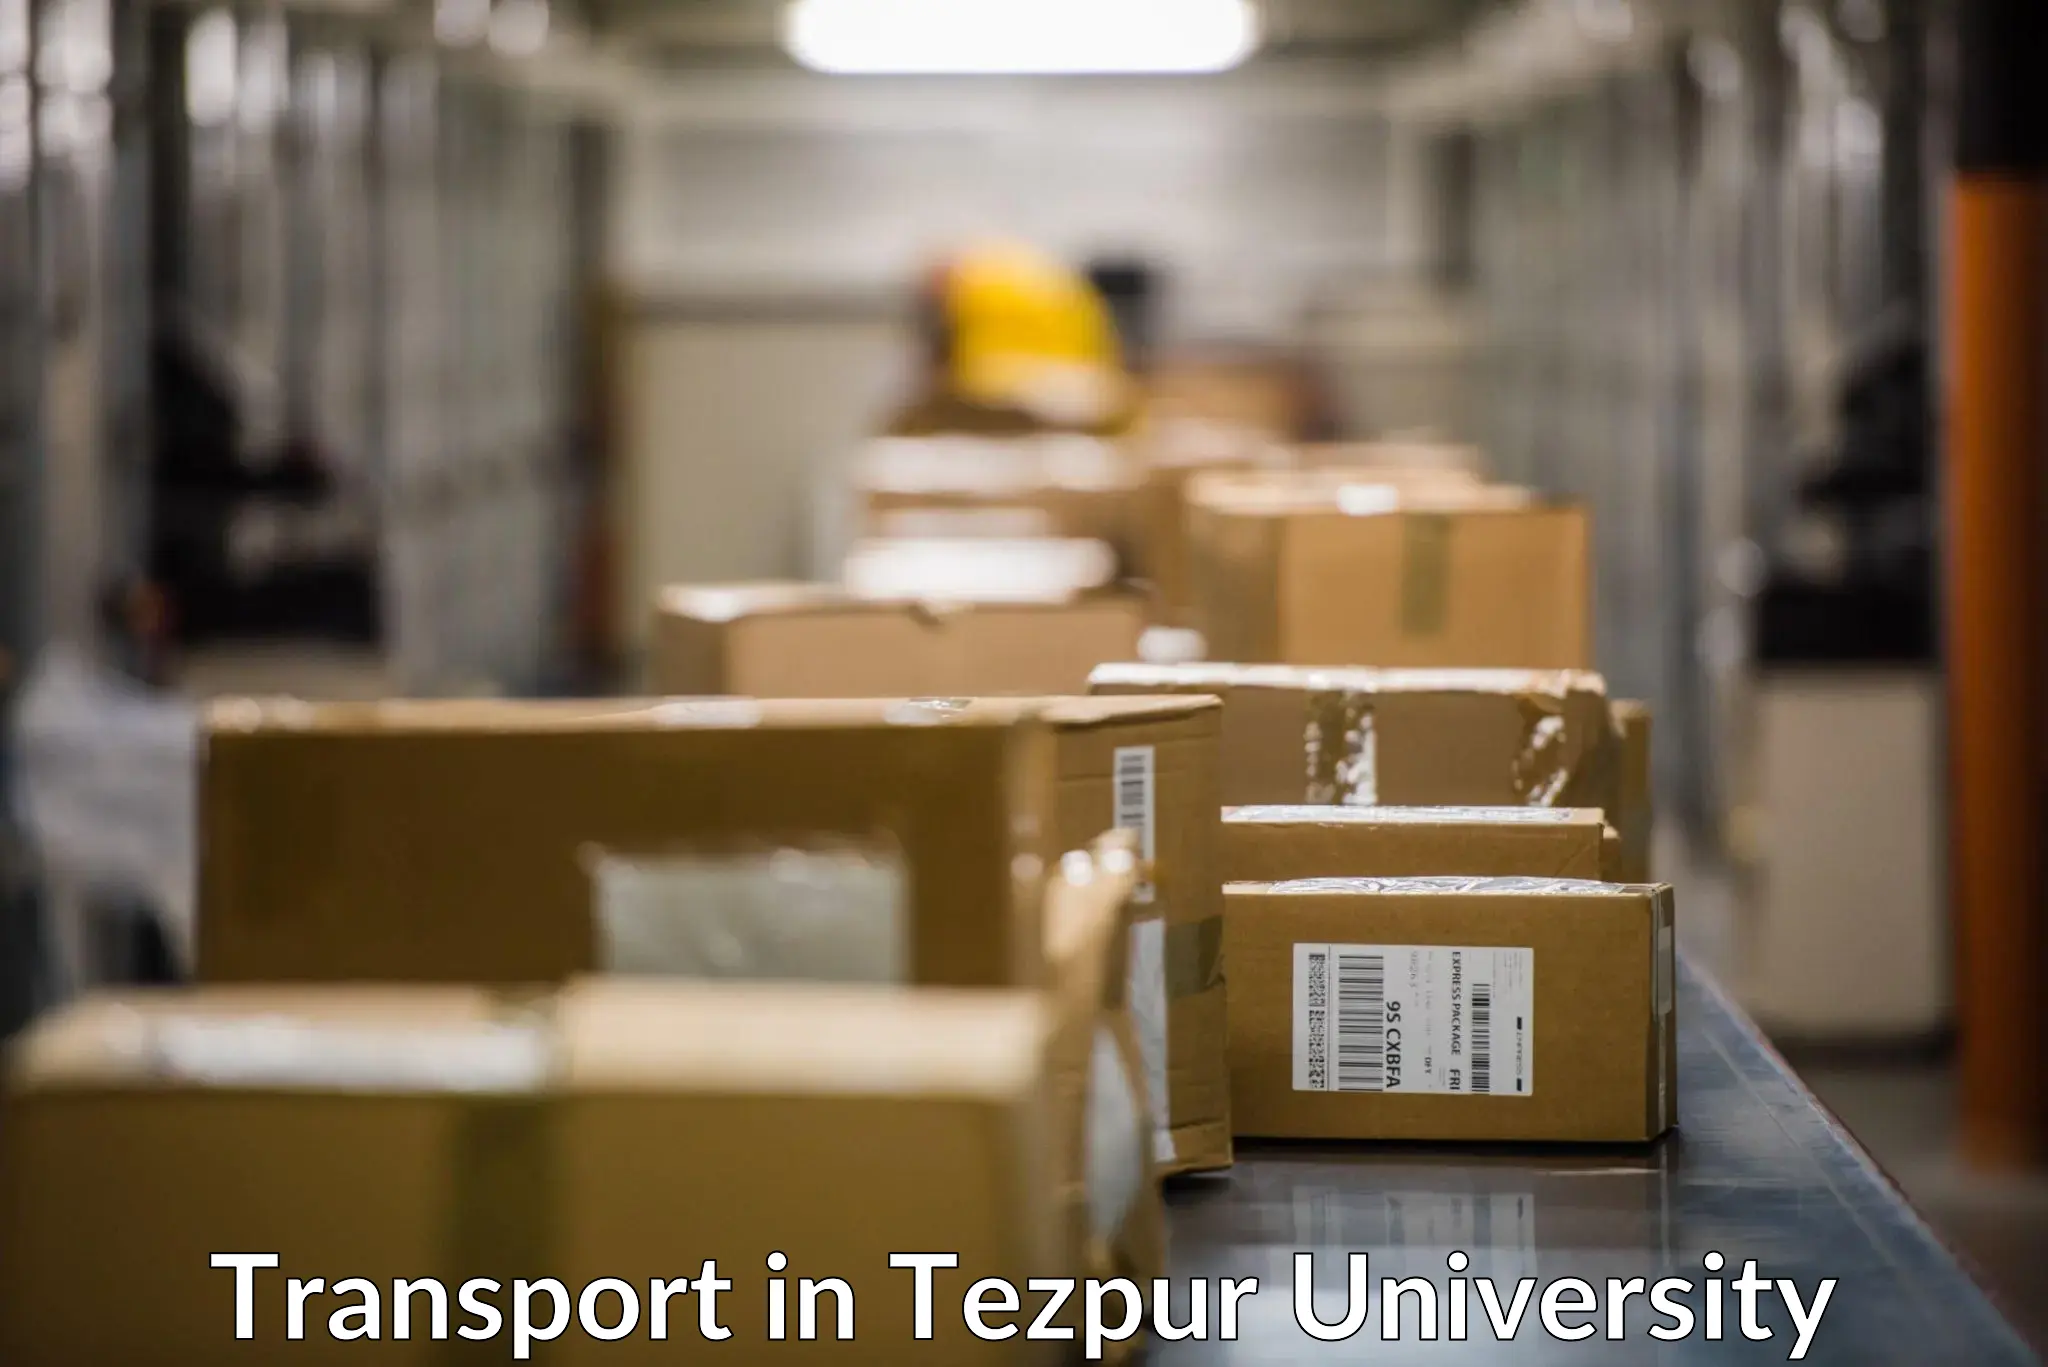 Transportation services in Tezpur University